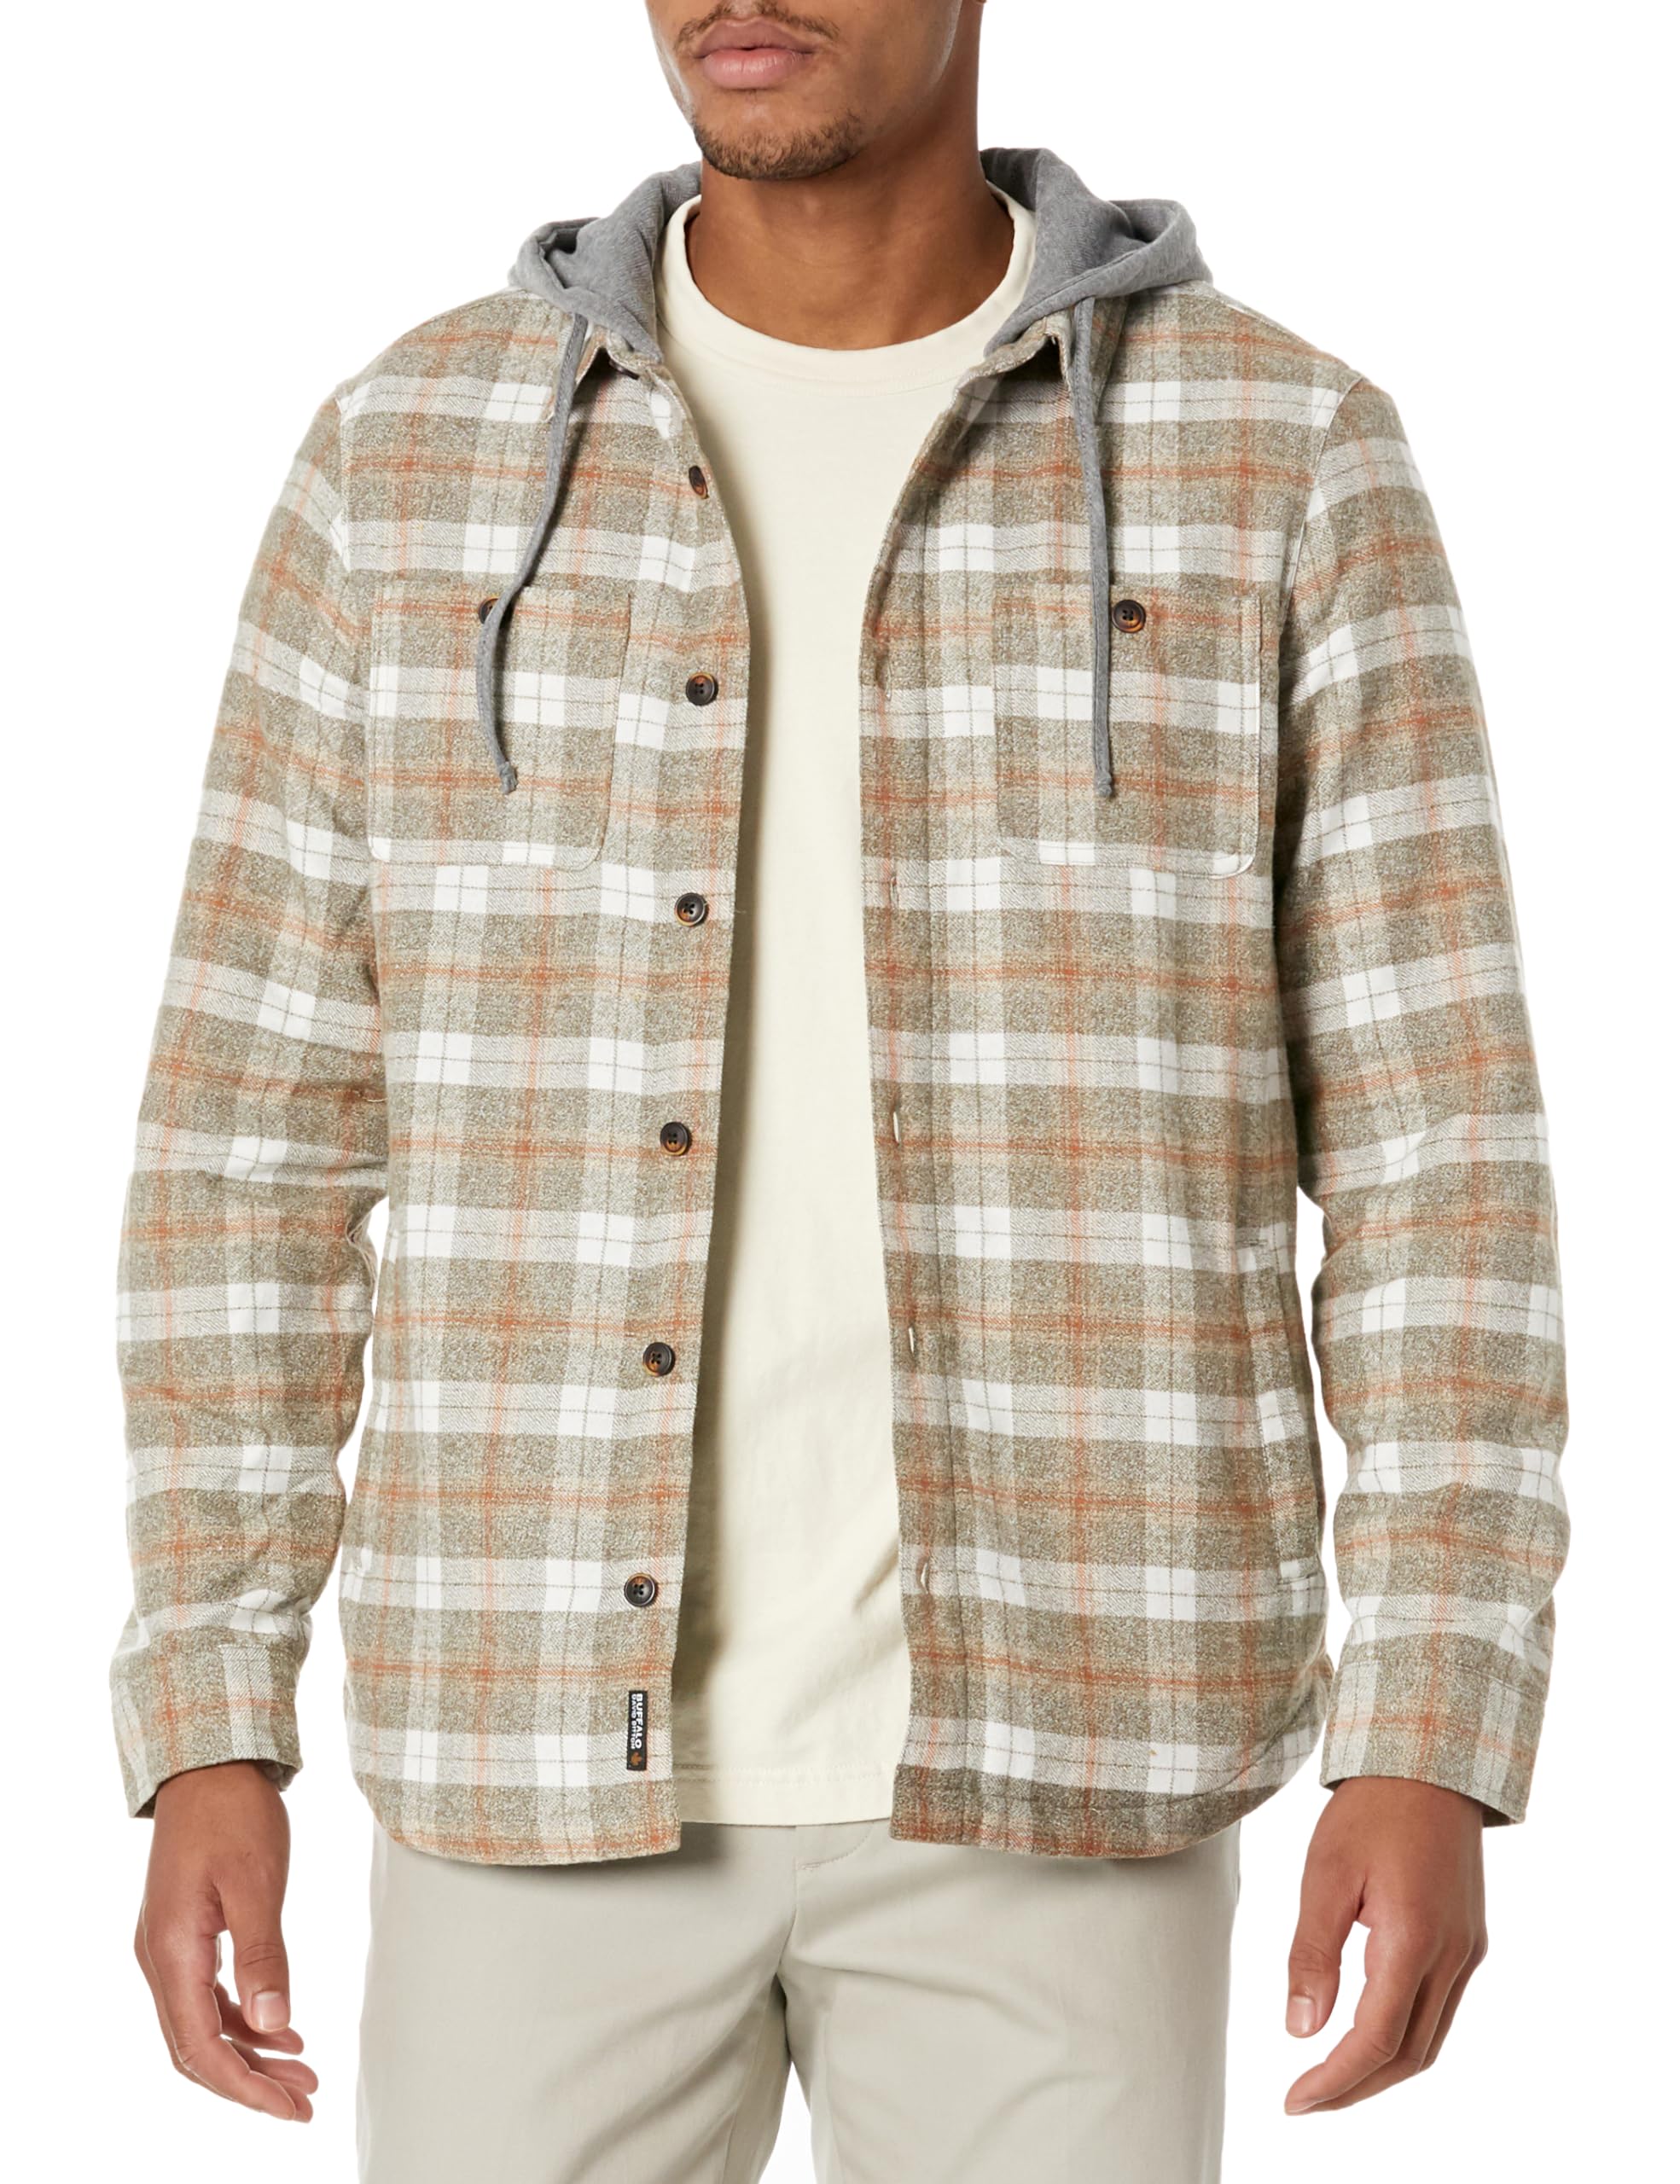 Buffalo David Bitton Men's Shirt Style Shacket Jacket